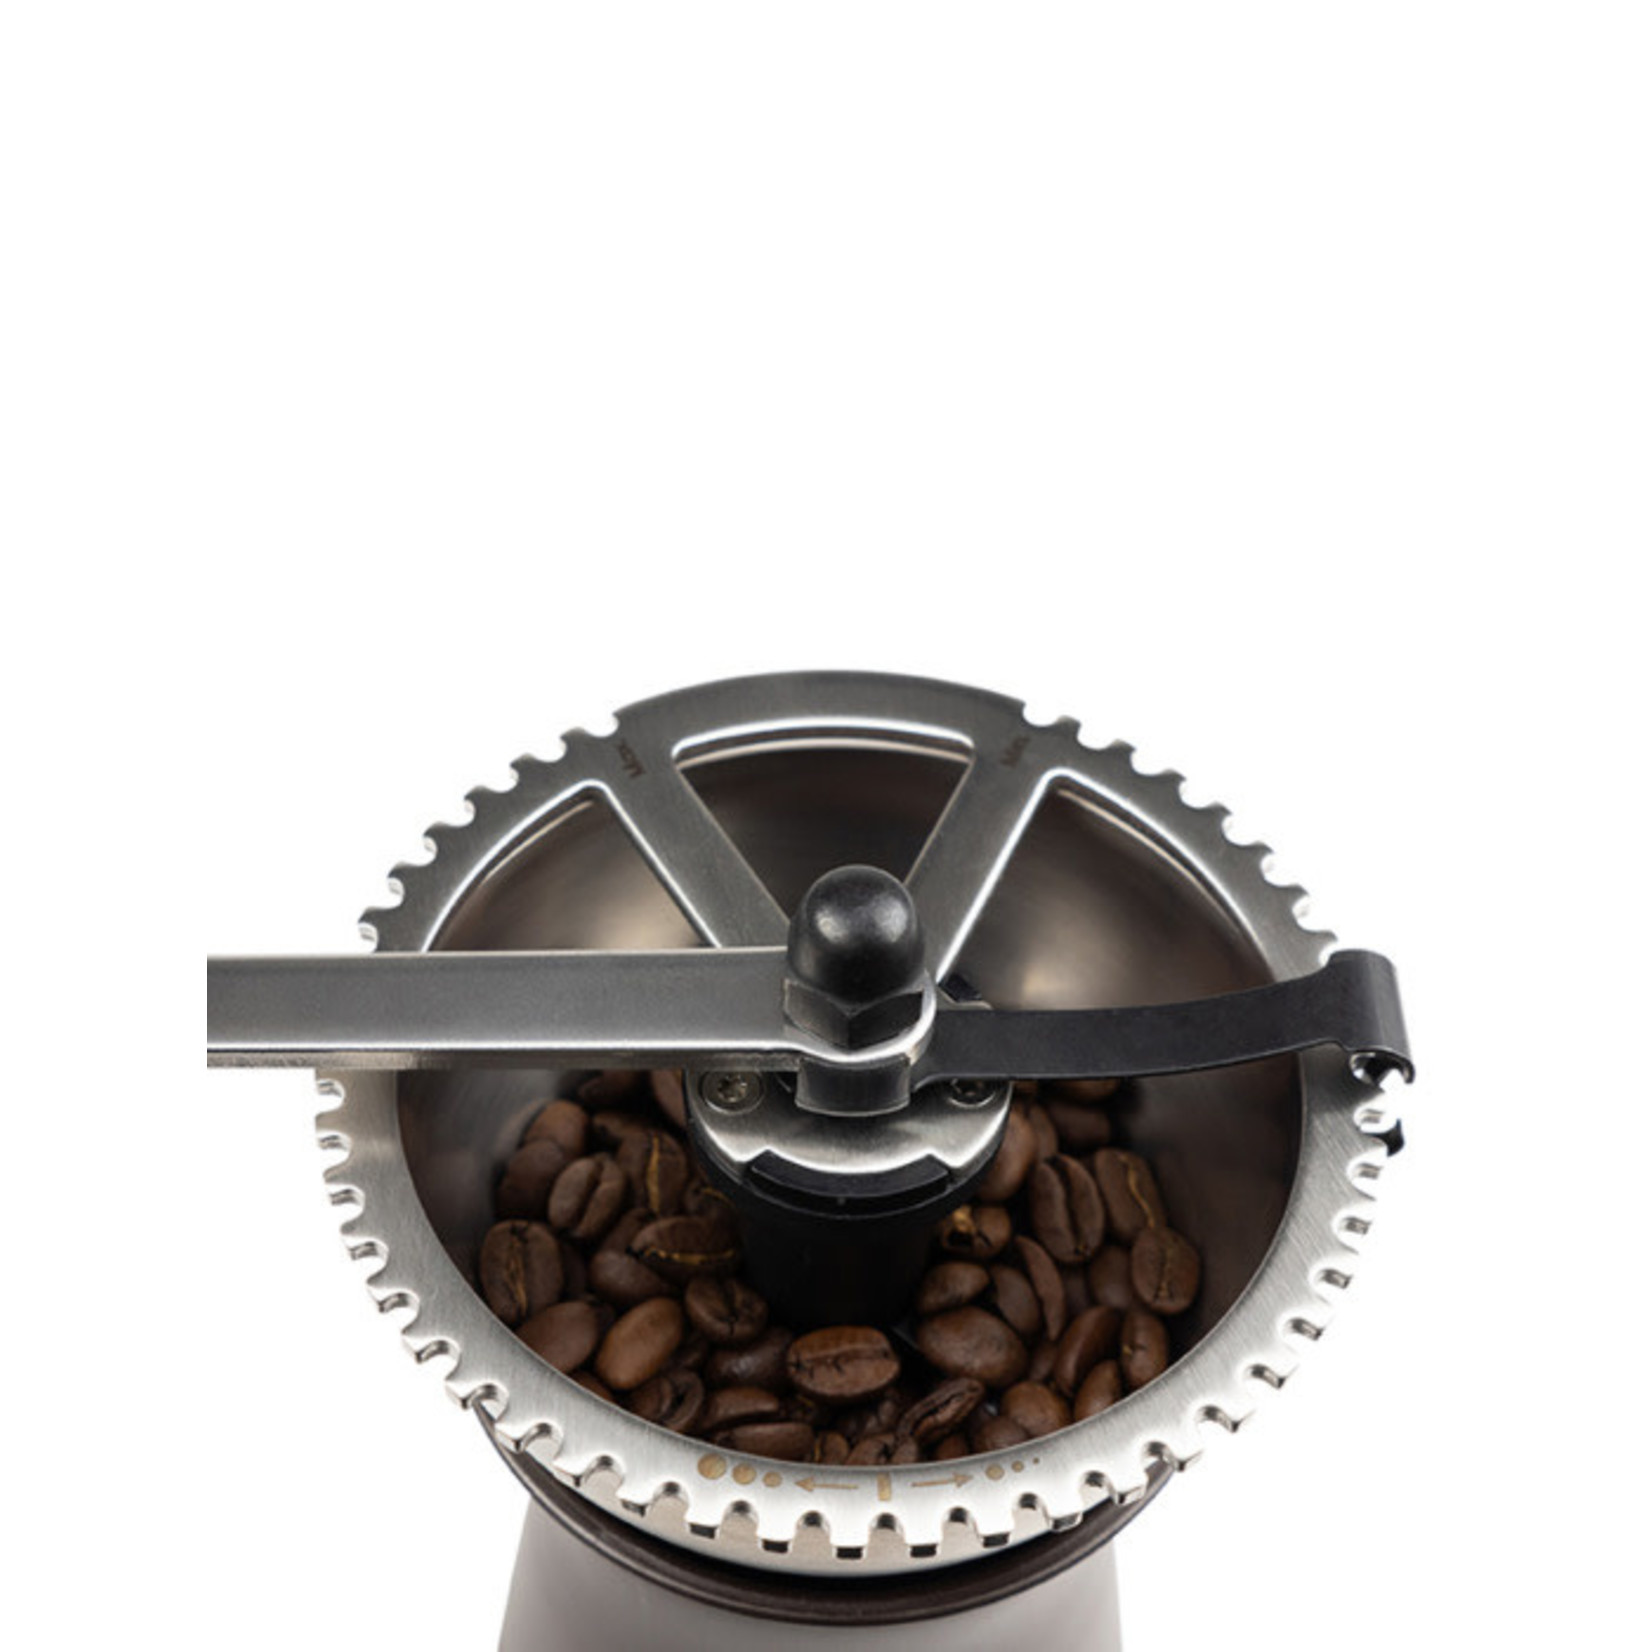 PEUGEOT PEUGEOT Kronos Manual Coffee Grinder